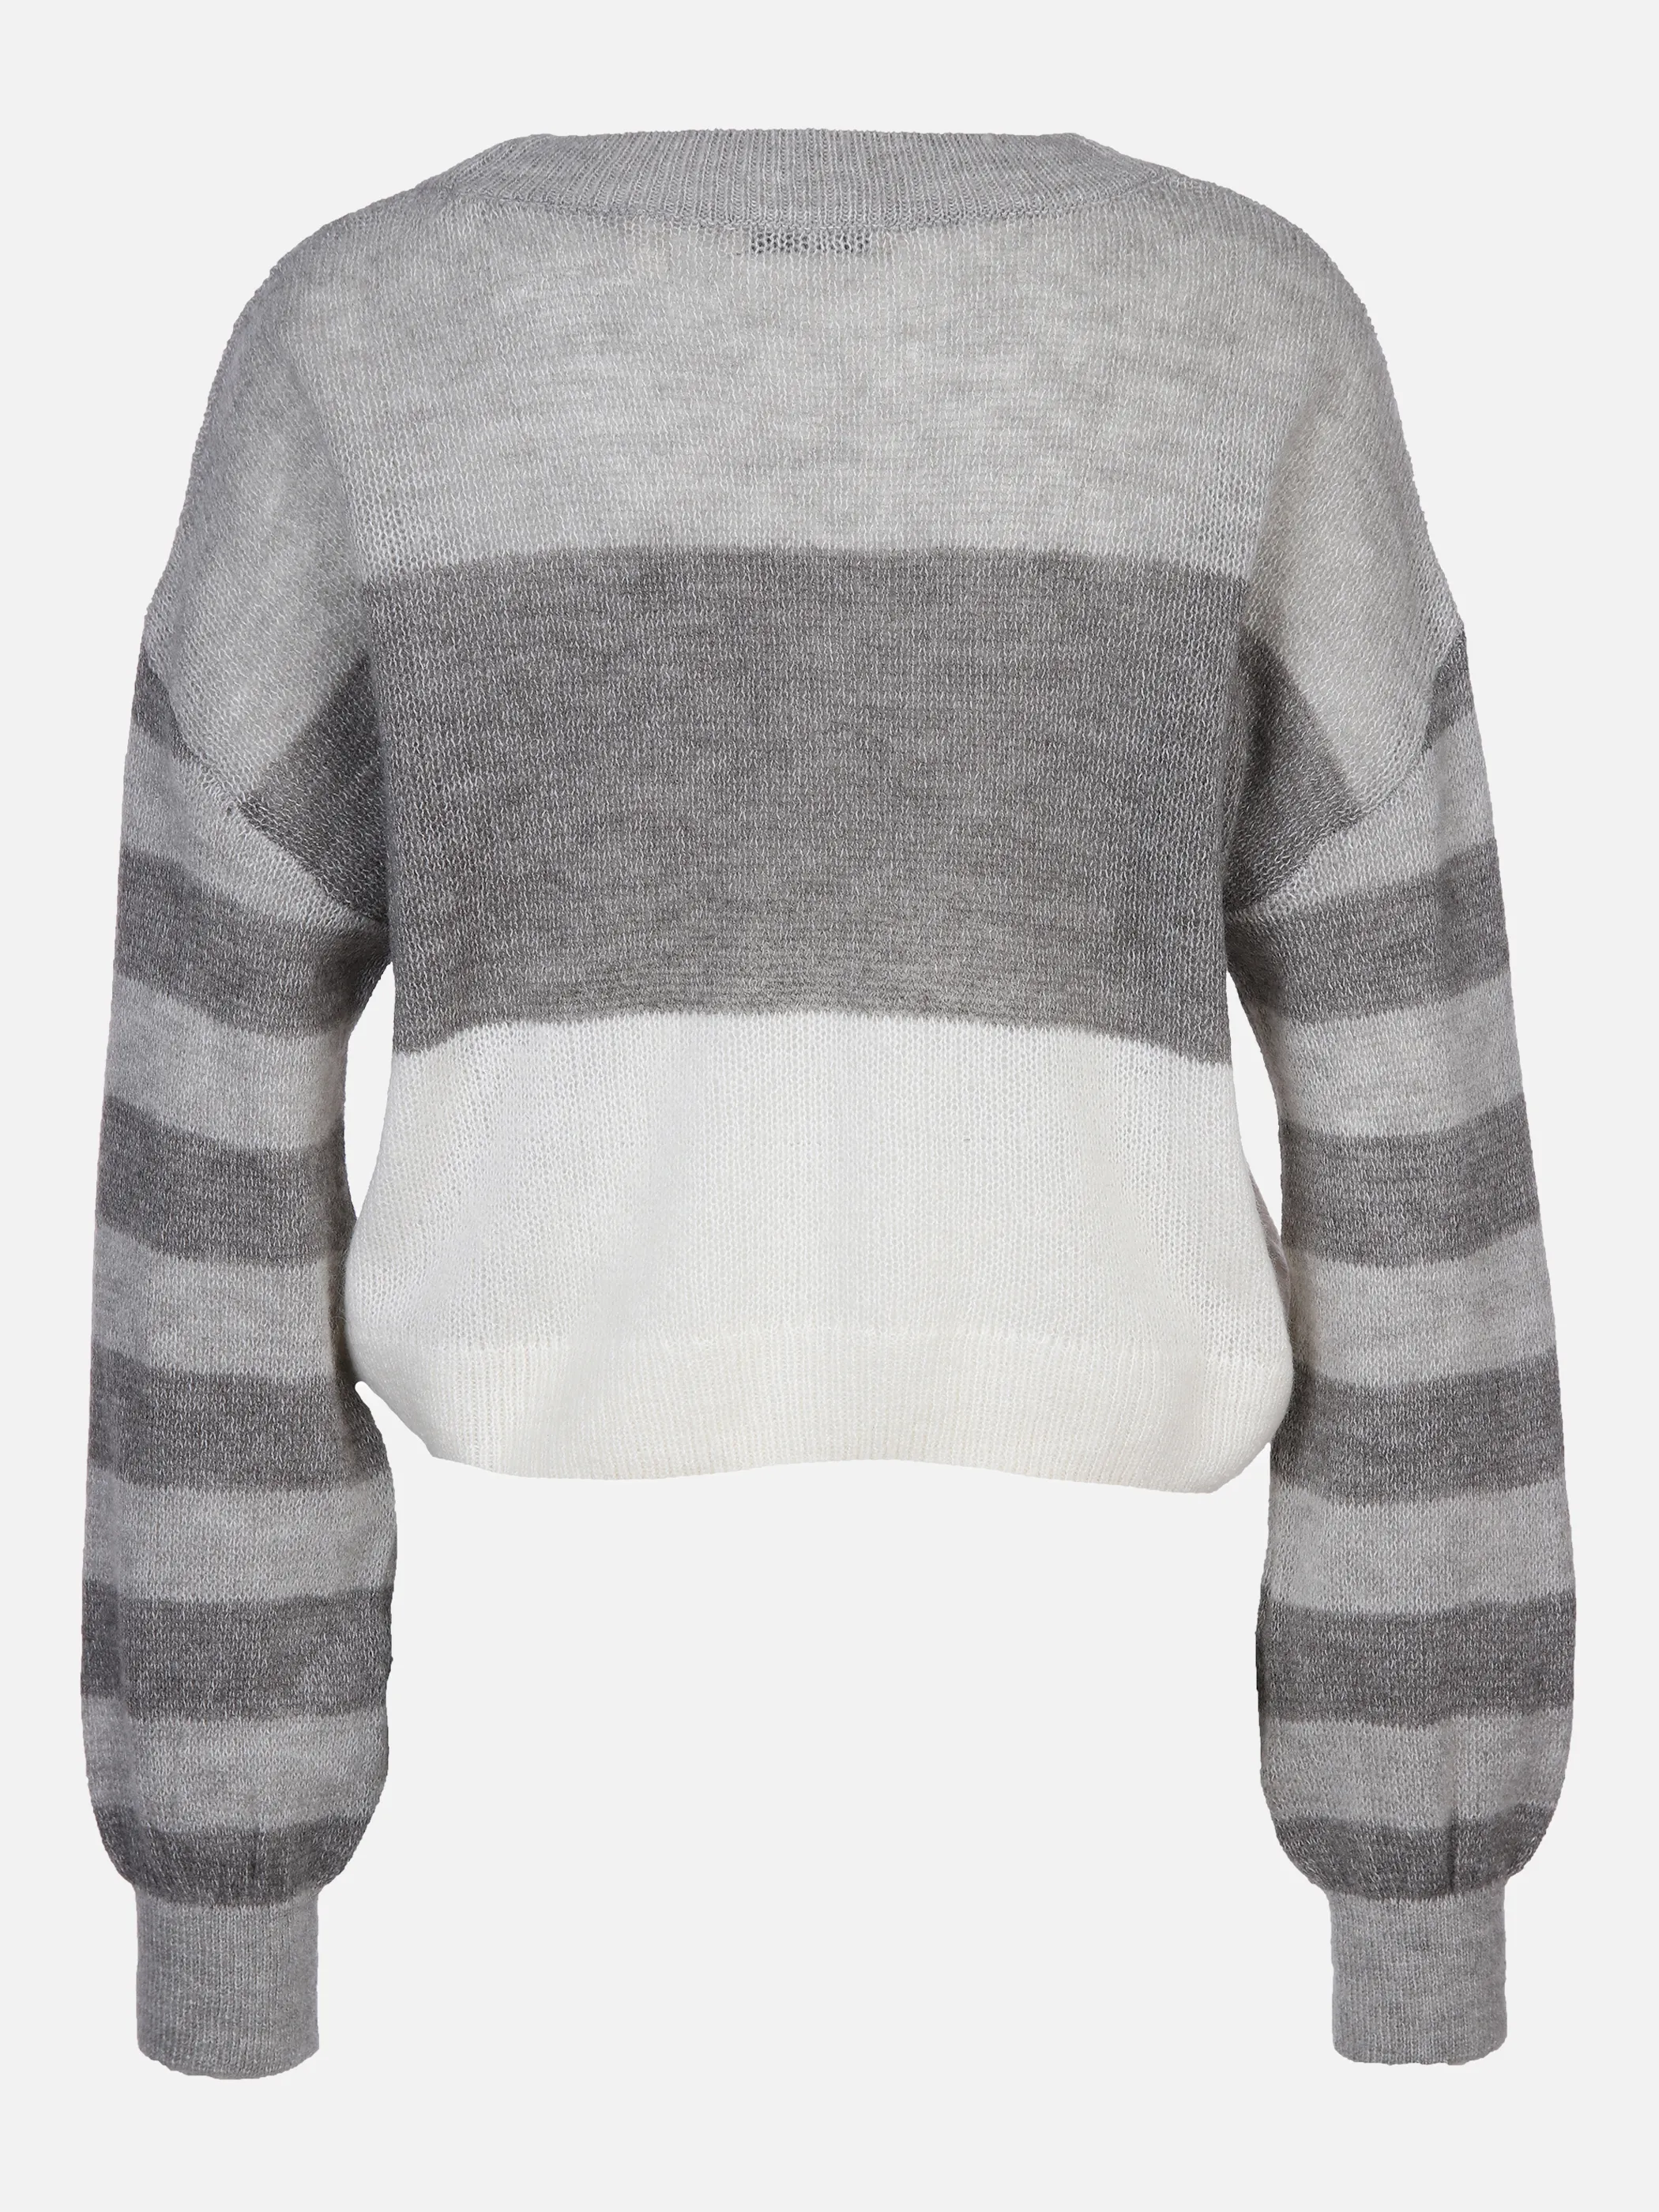 Esprit 082EE1I309 sweater stripe Grau 869833 E043 2